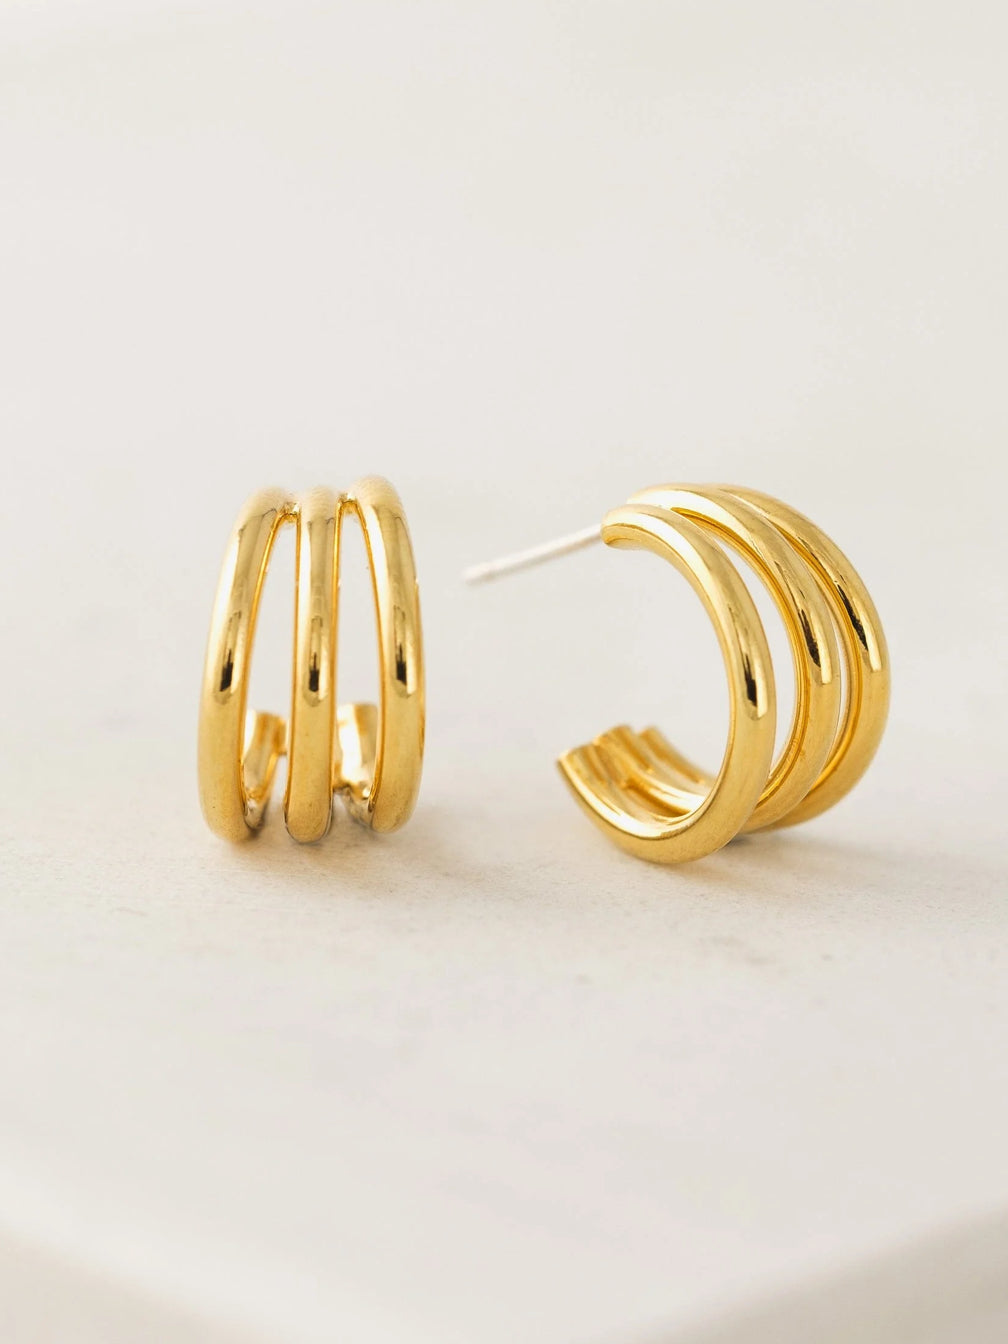 Lovers Tempo: Zara Hoop Earrings in Gold